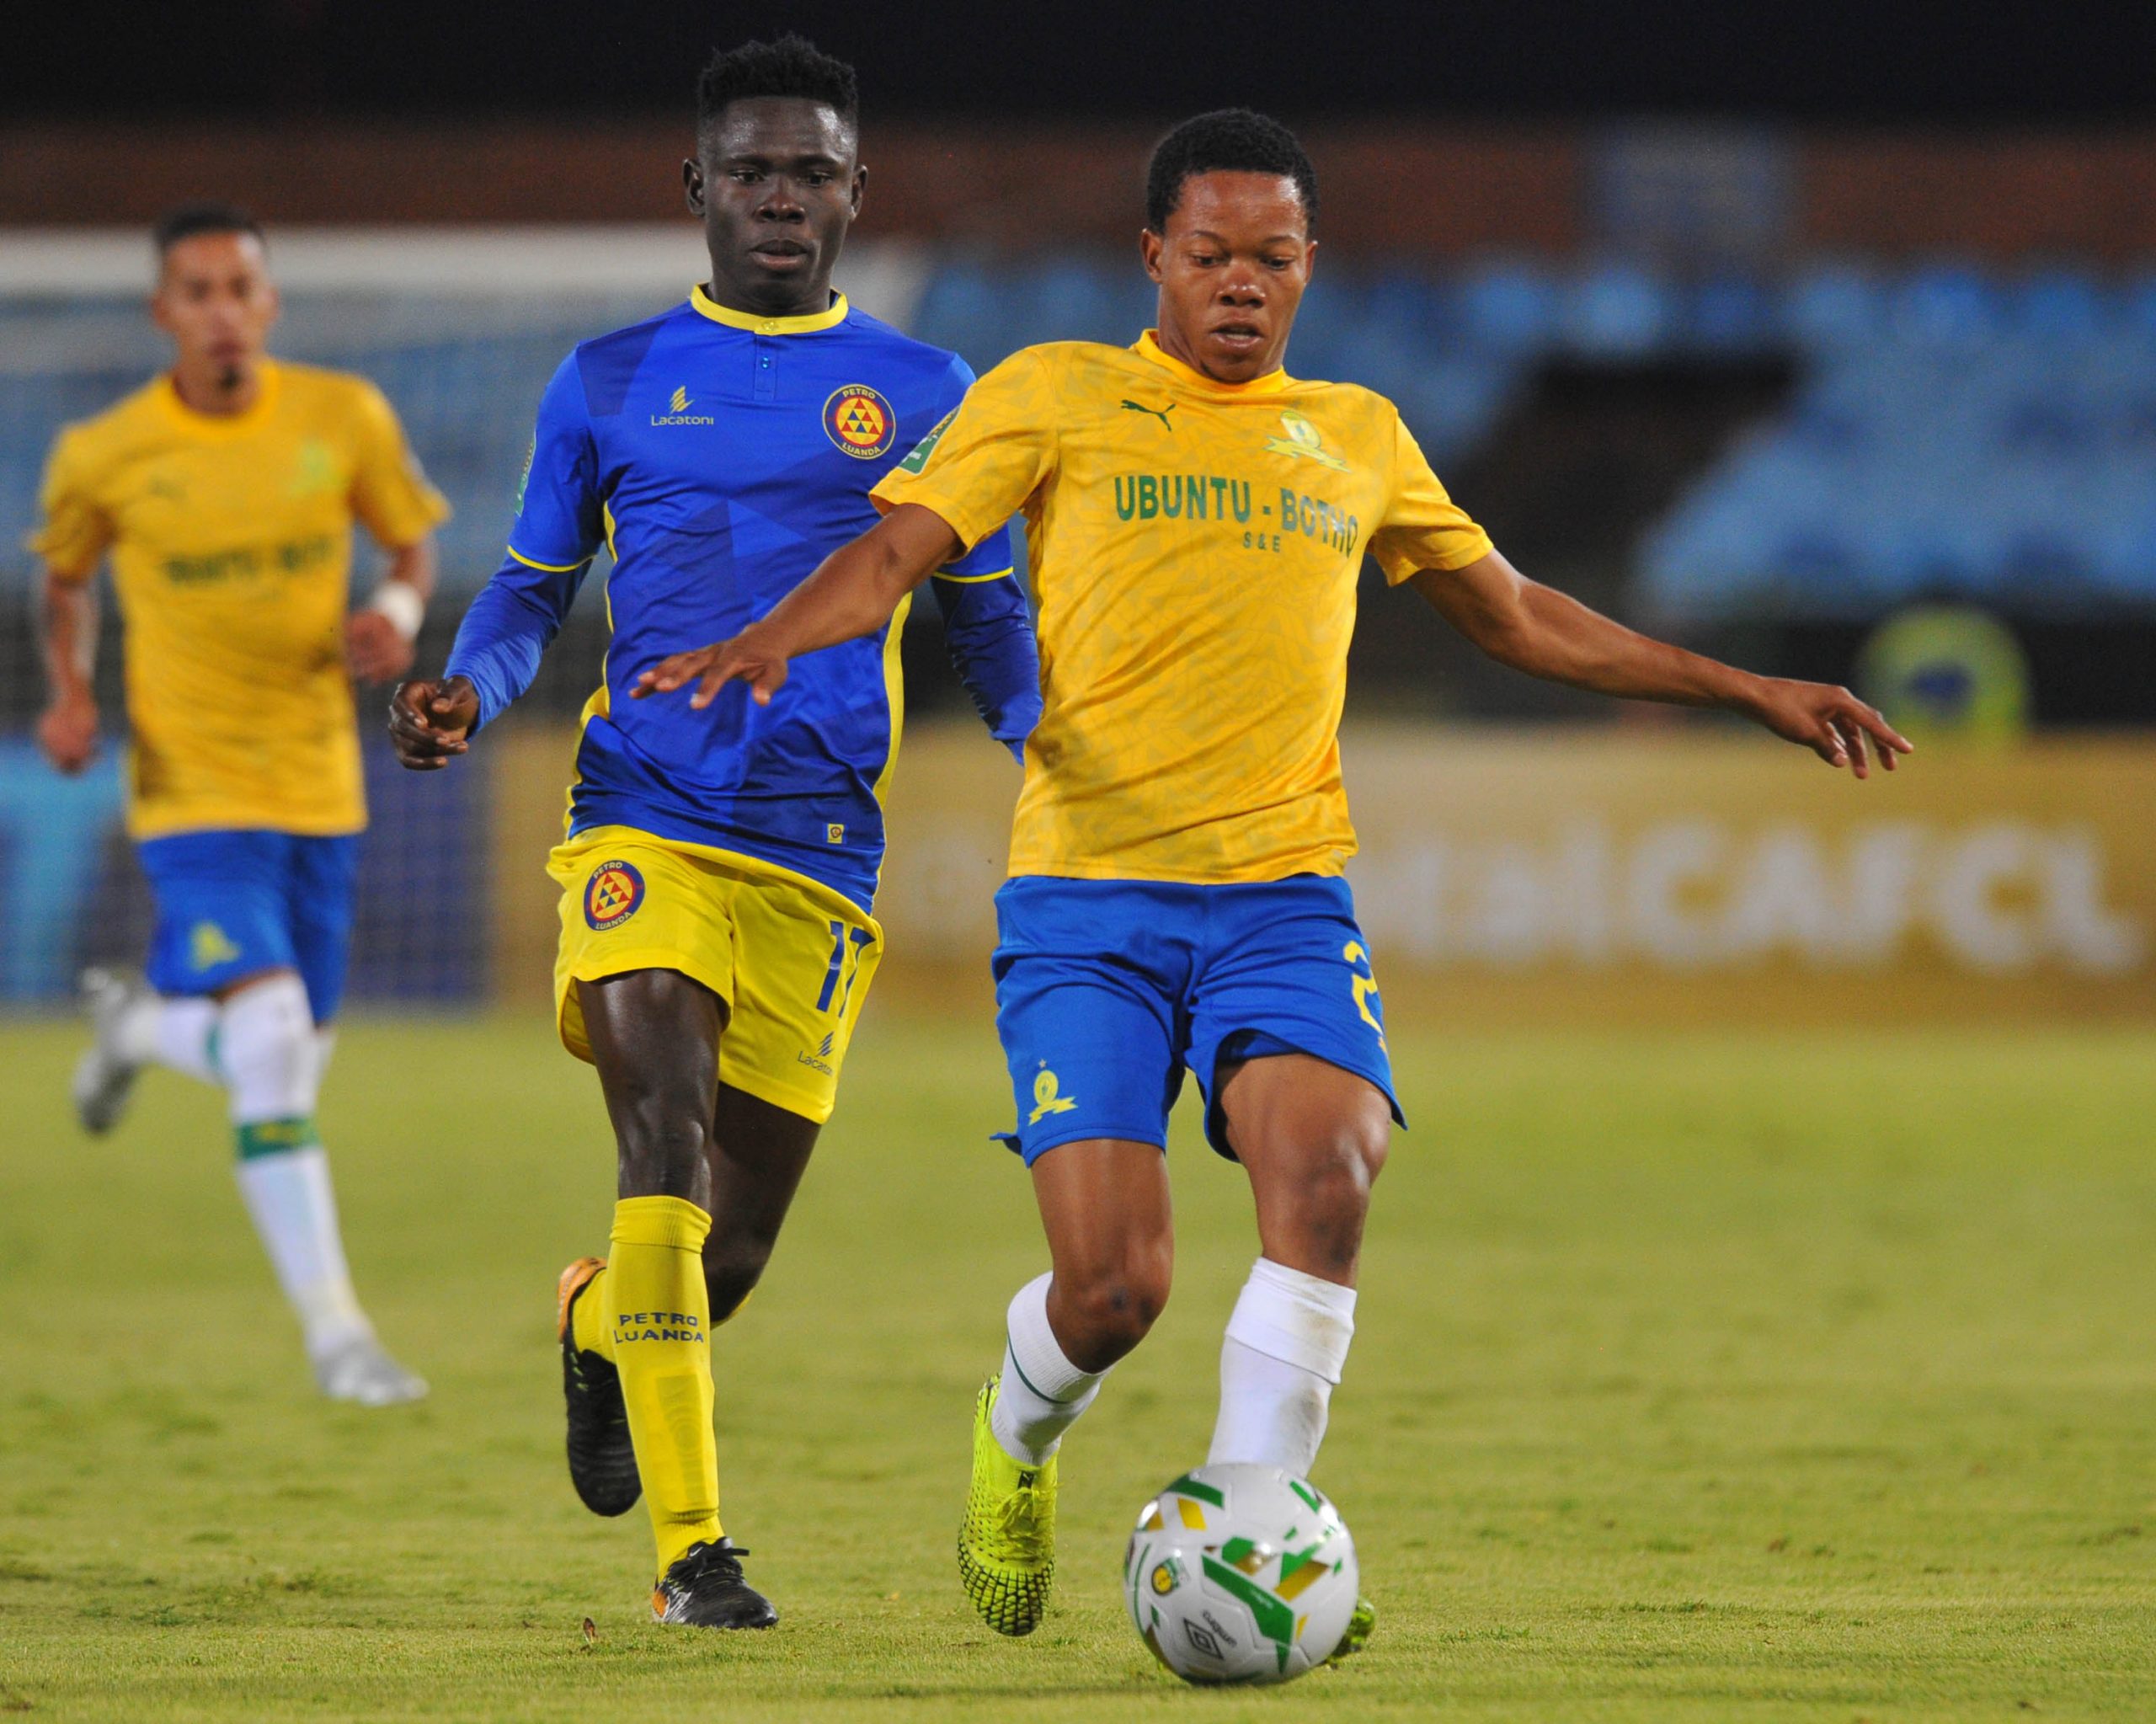 Mamelodi Sundowns remain top of CAF Group C despite draw